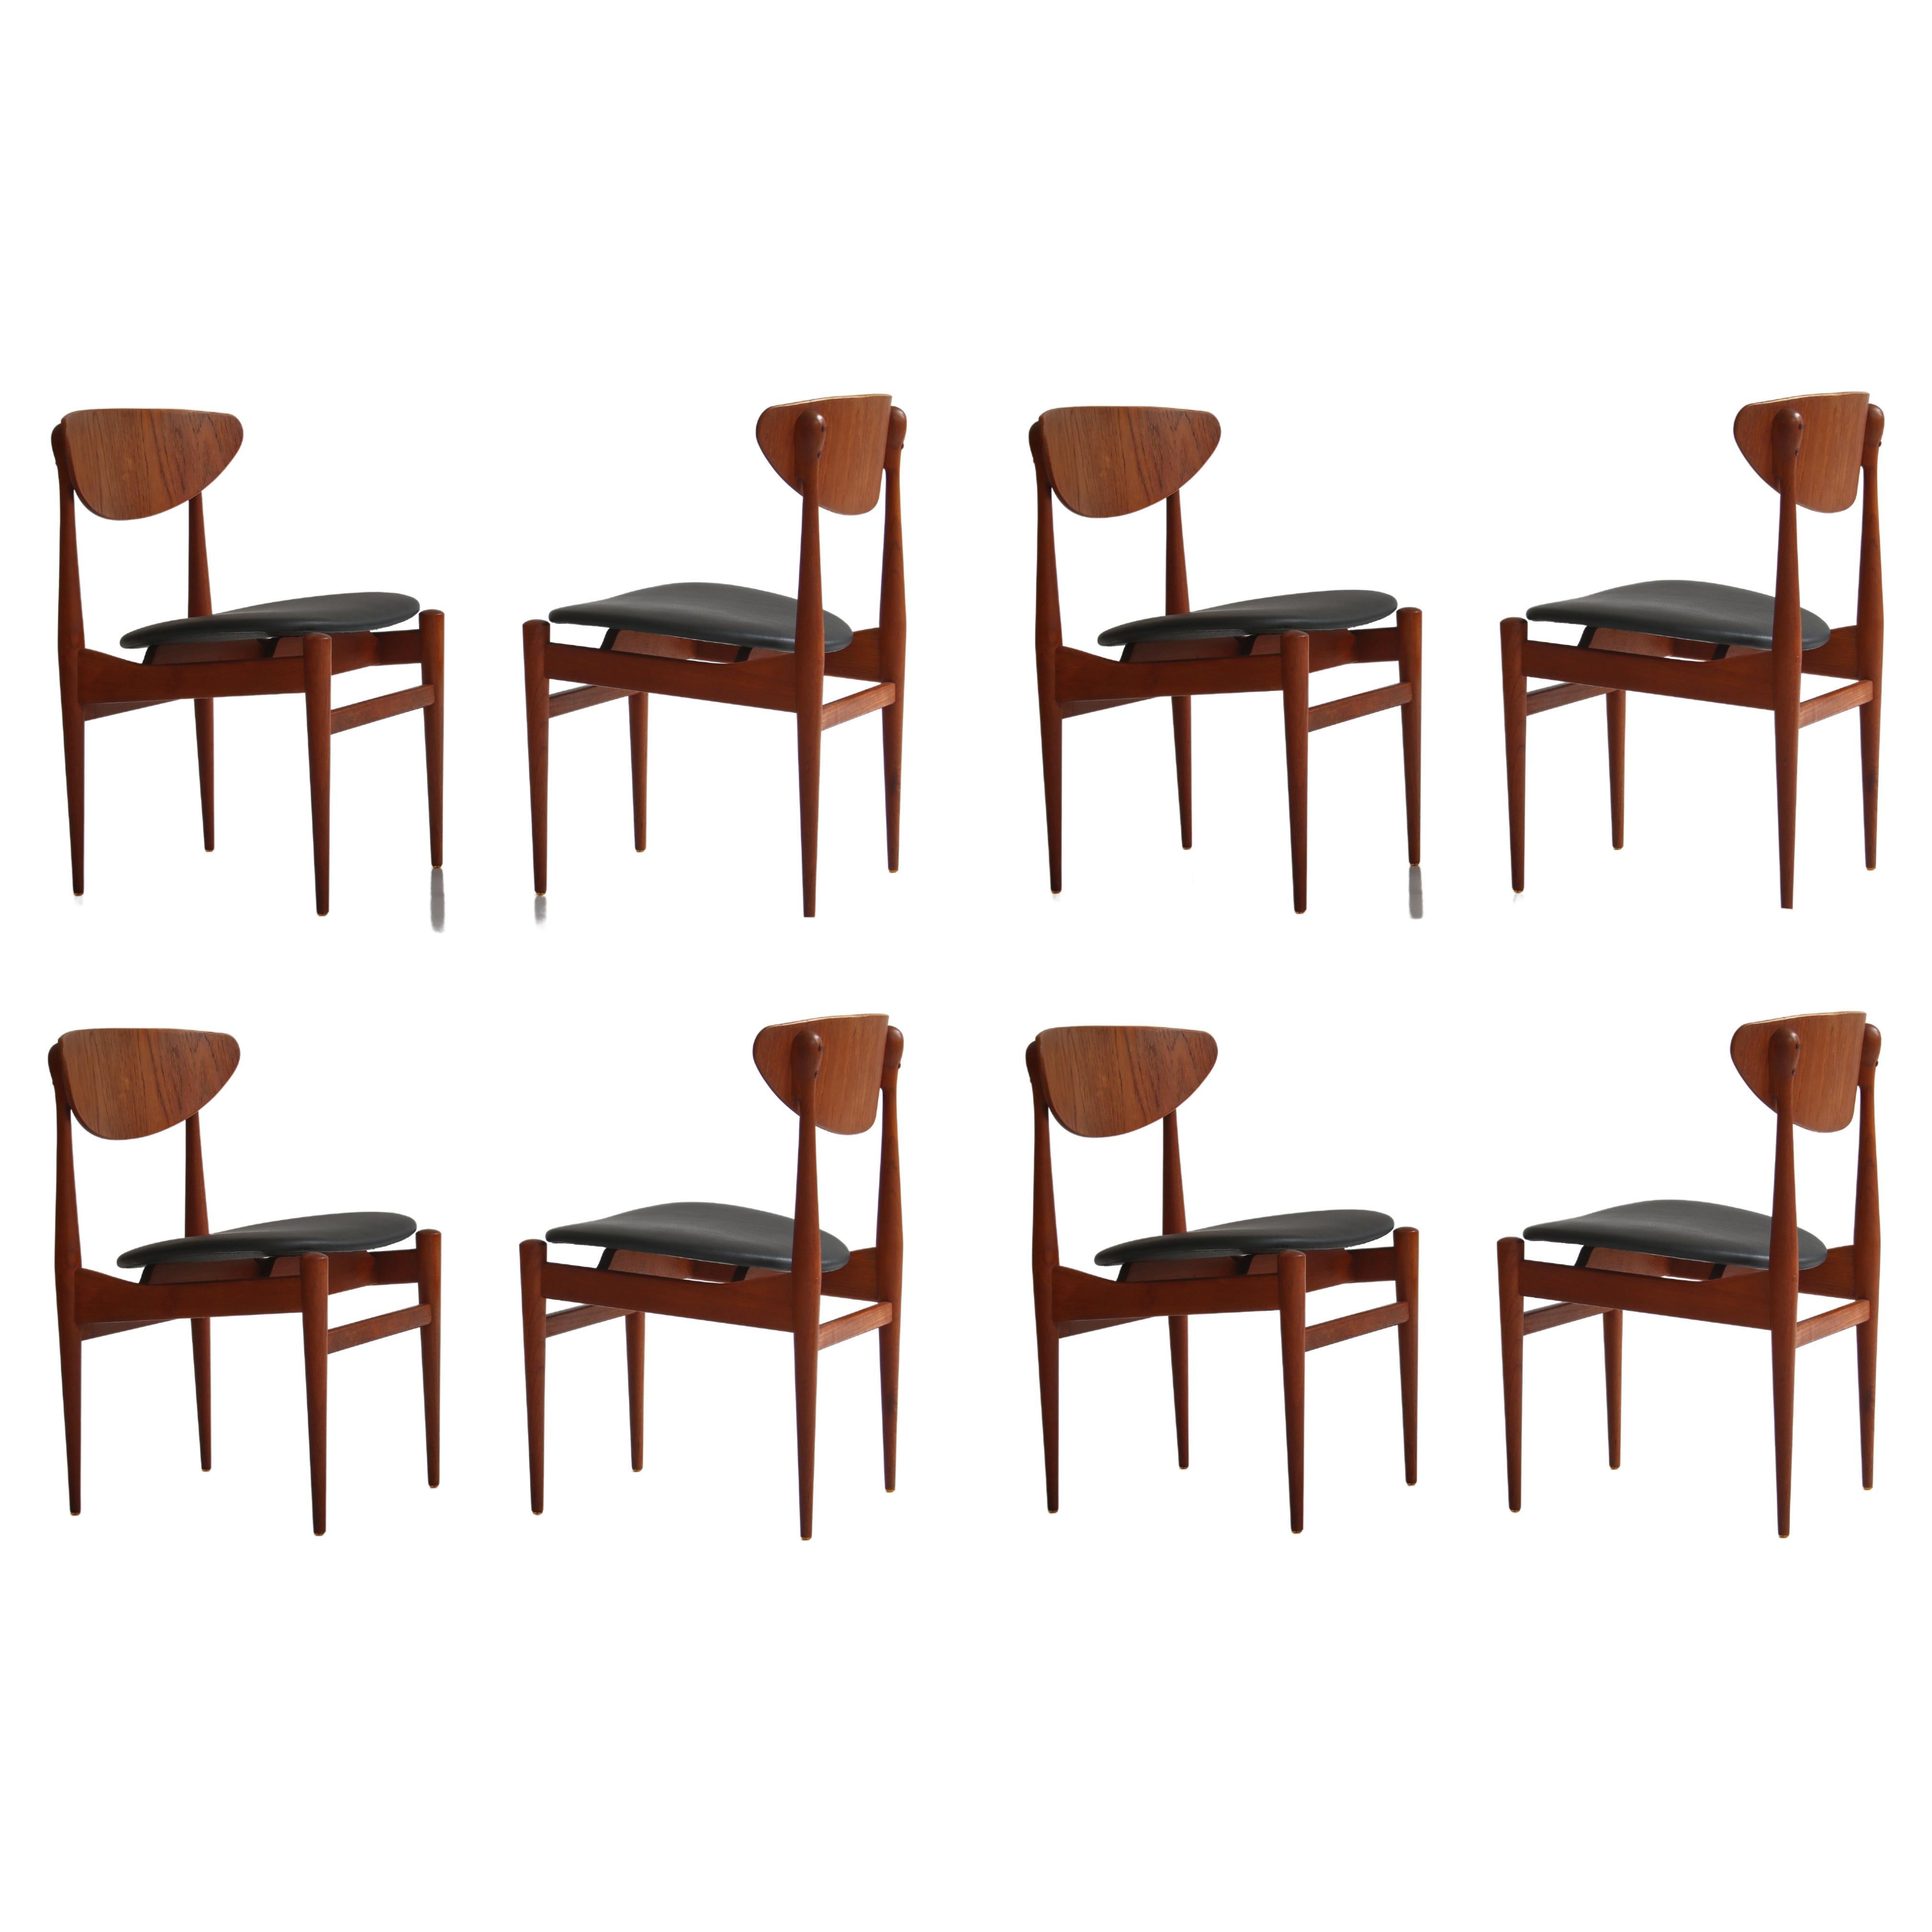 Set of 8 Danish Modern Dining Chairs Teak and Black Leather by Inge Rubino, 1963